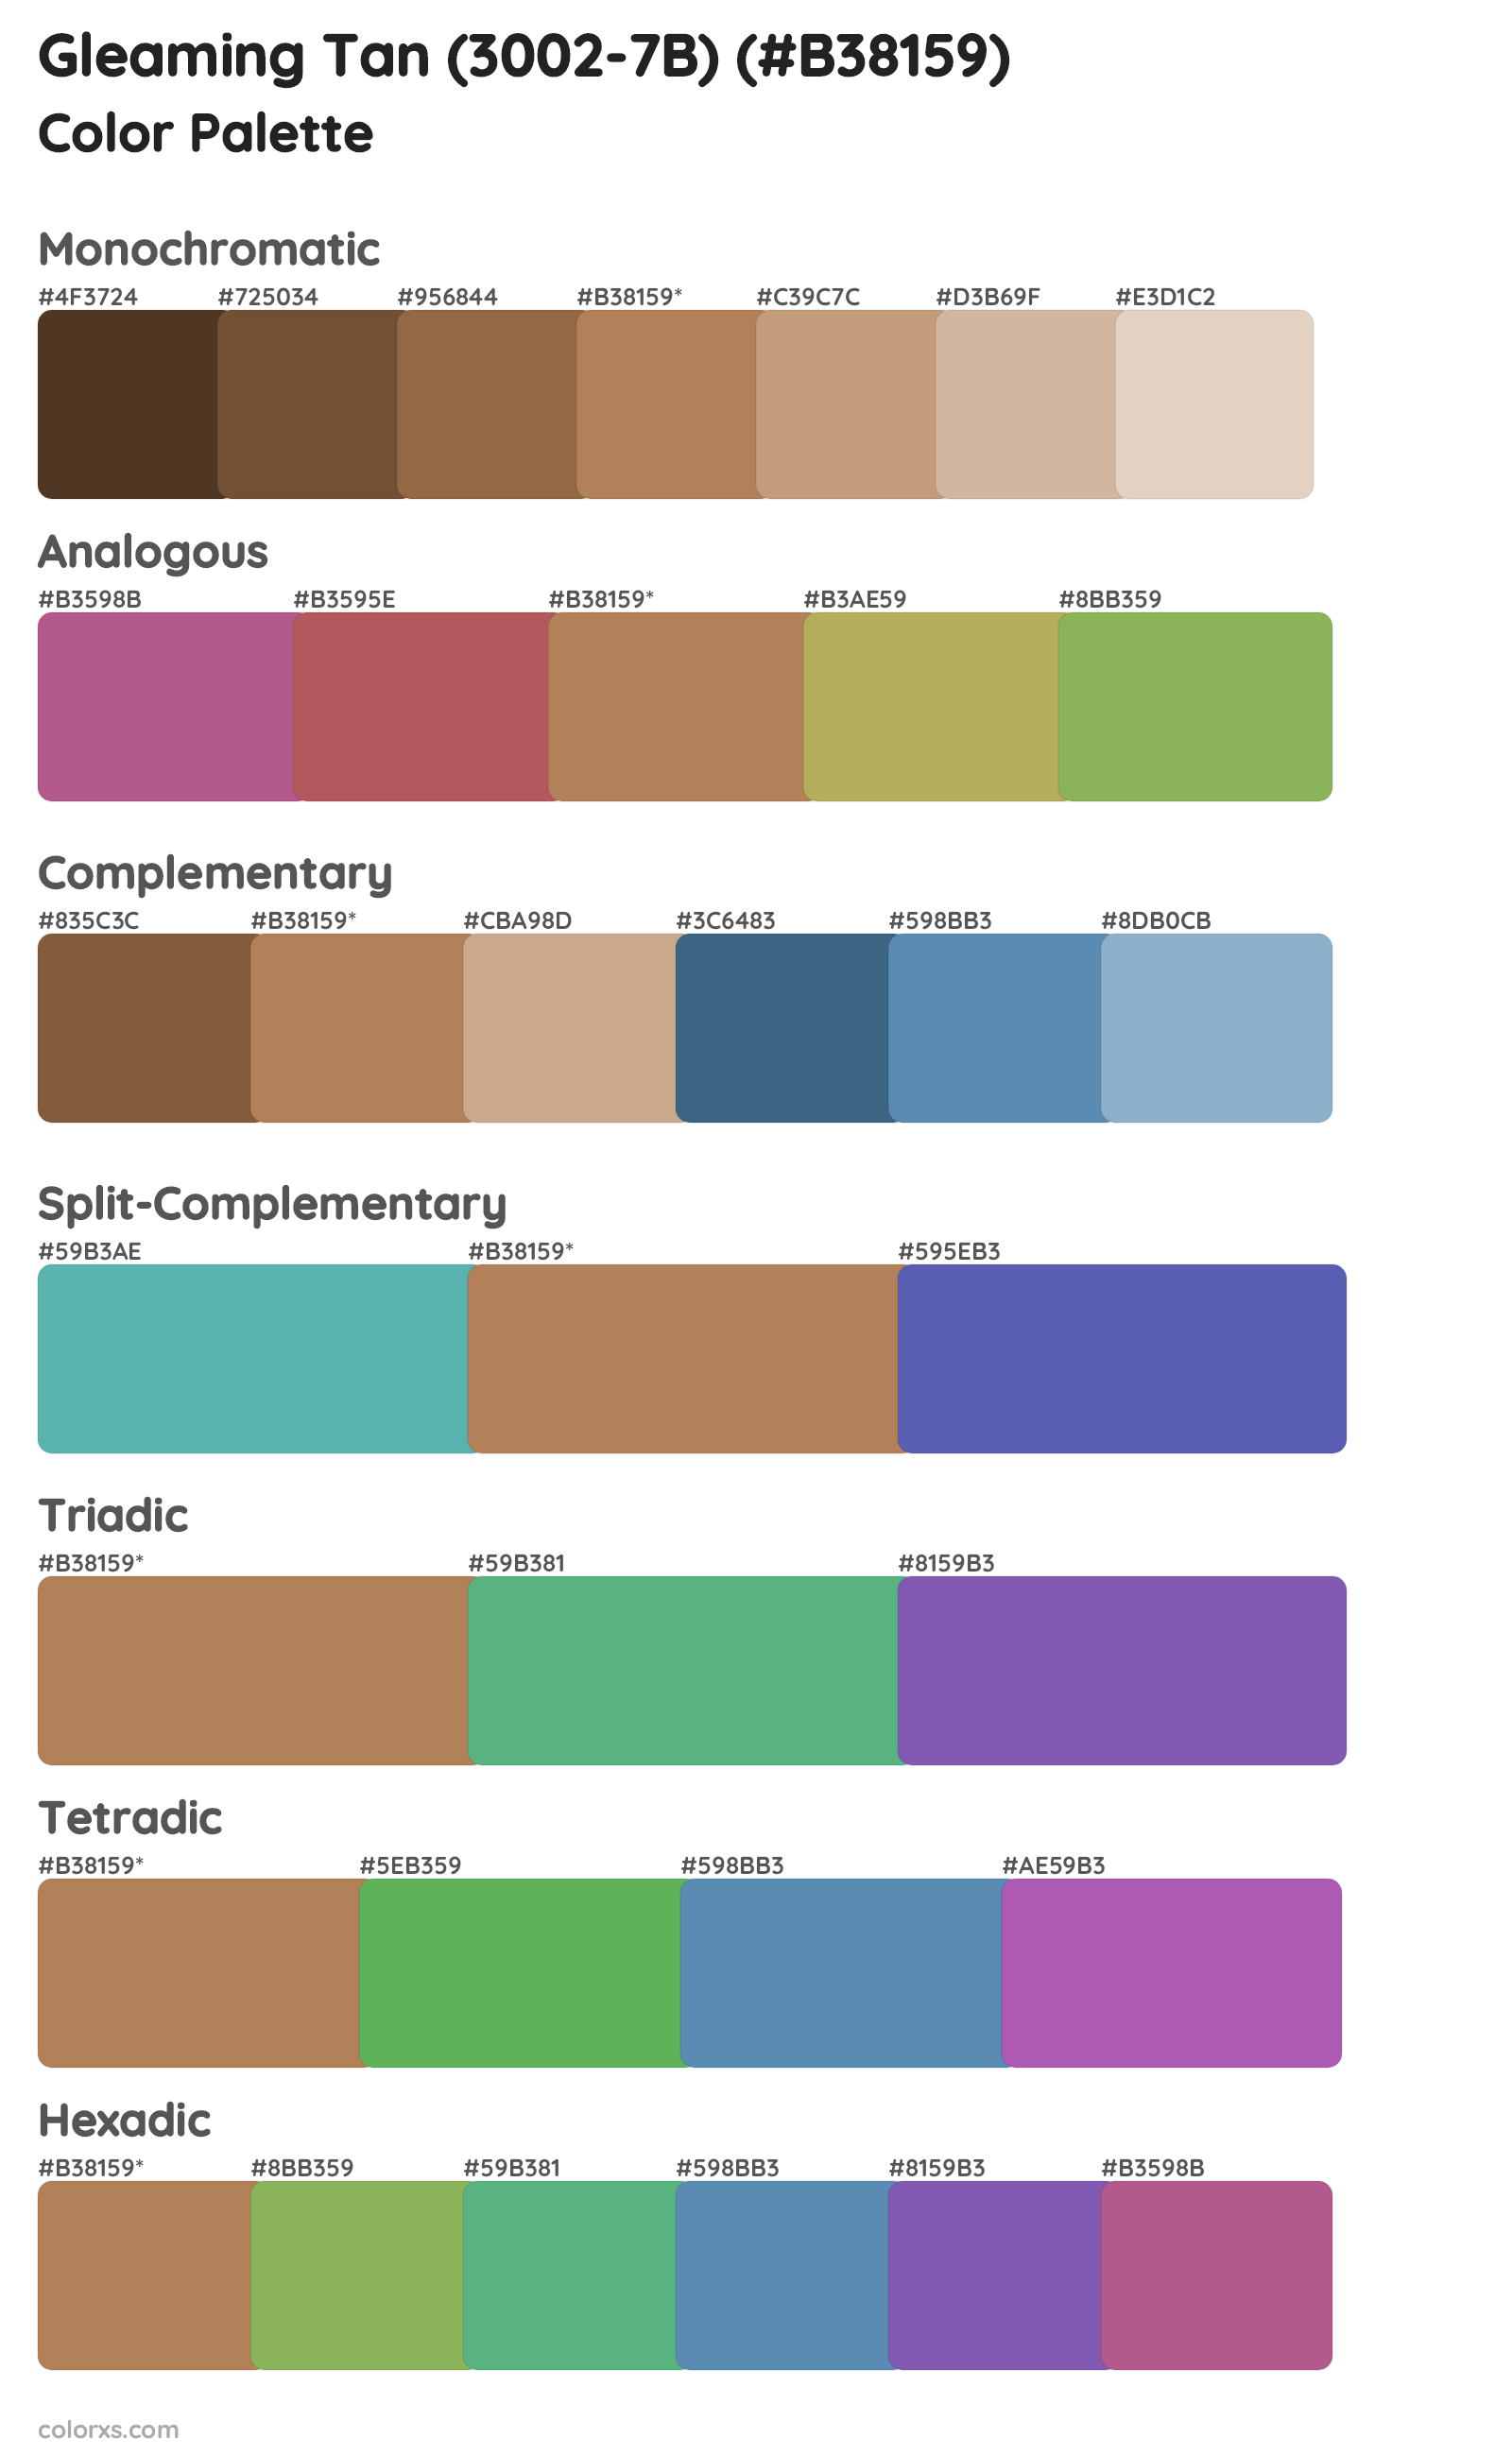 Gleaming Tan (3002-7B) Color Scheme Palettes